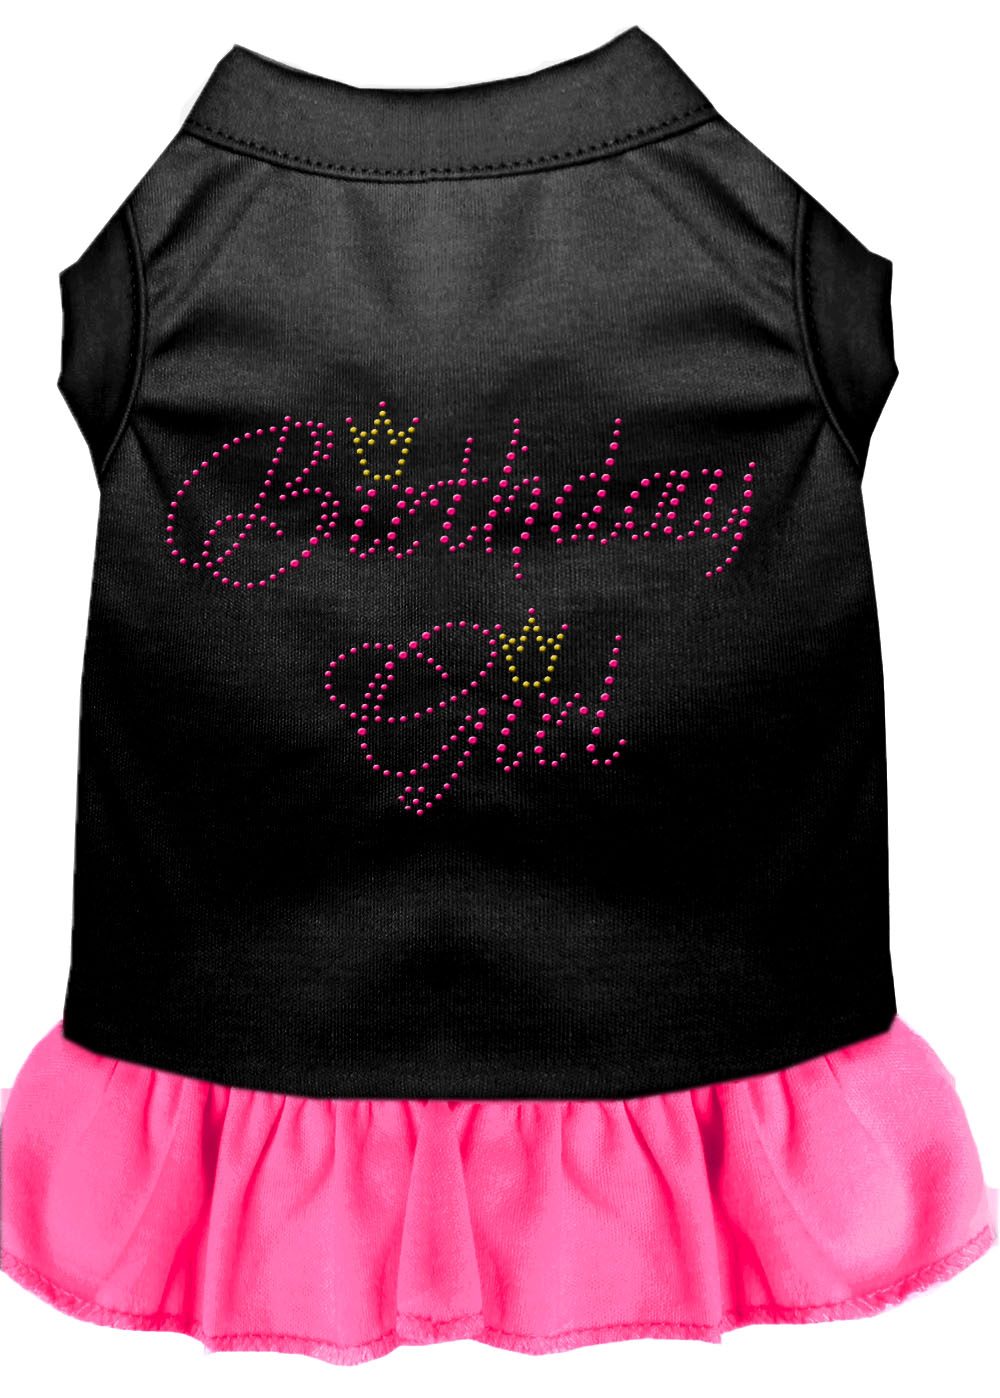 Birthday Girl Rhinestone Dress Black with Bright Pink XL